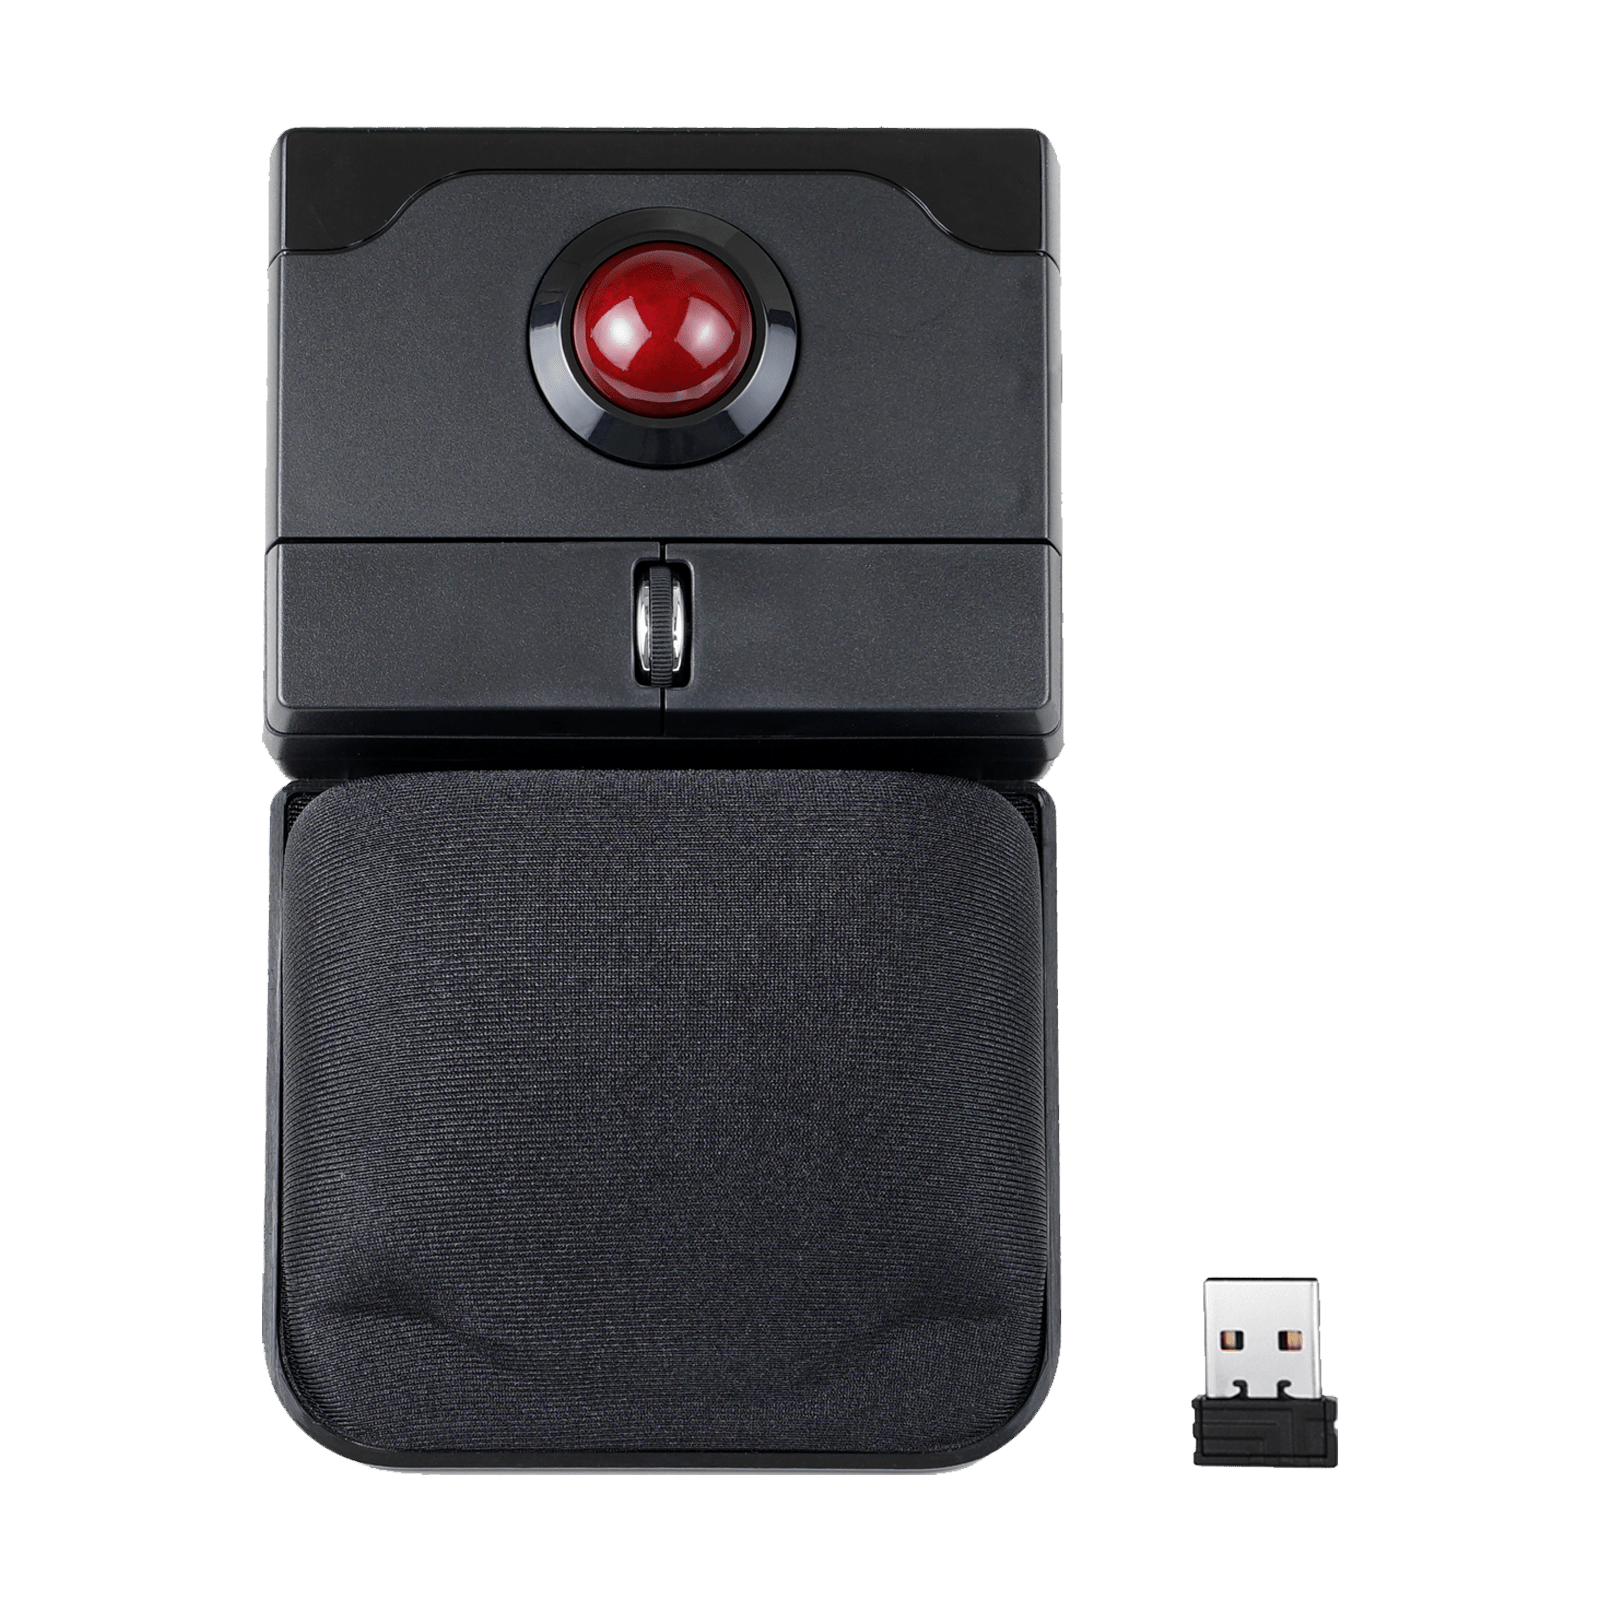 PERIPRO-706 - Wireless Trackball Mouse plus Wrist Rest Pad 800 DPI - Perixx Europe